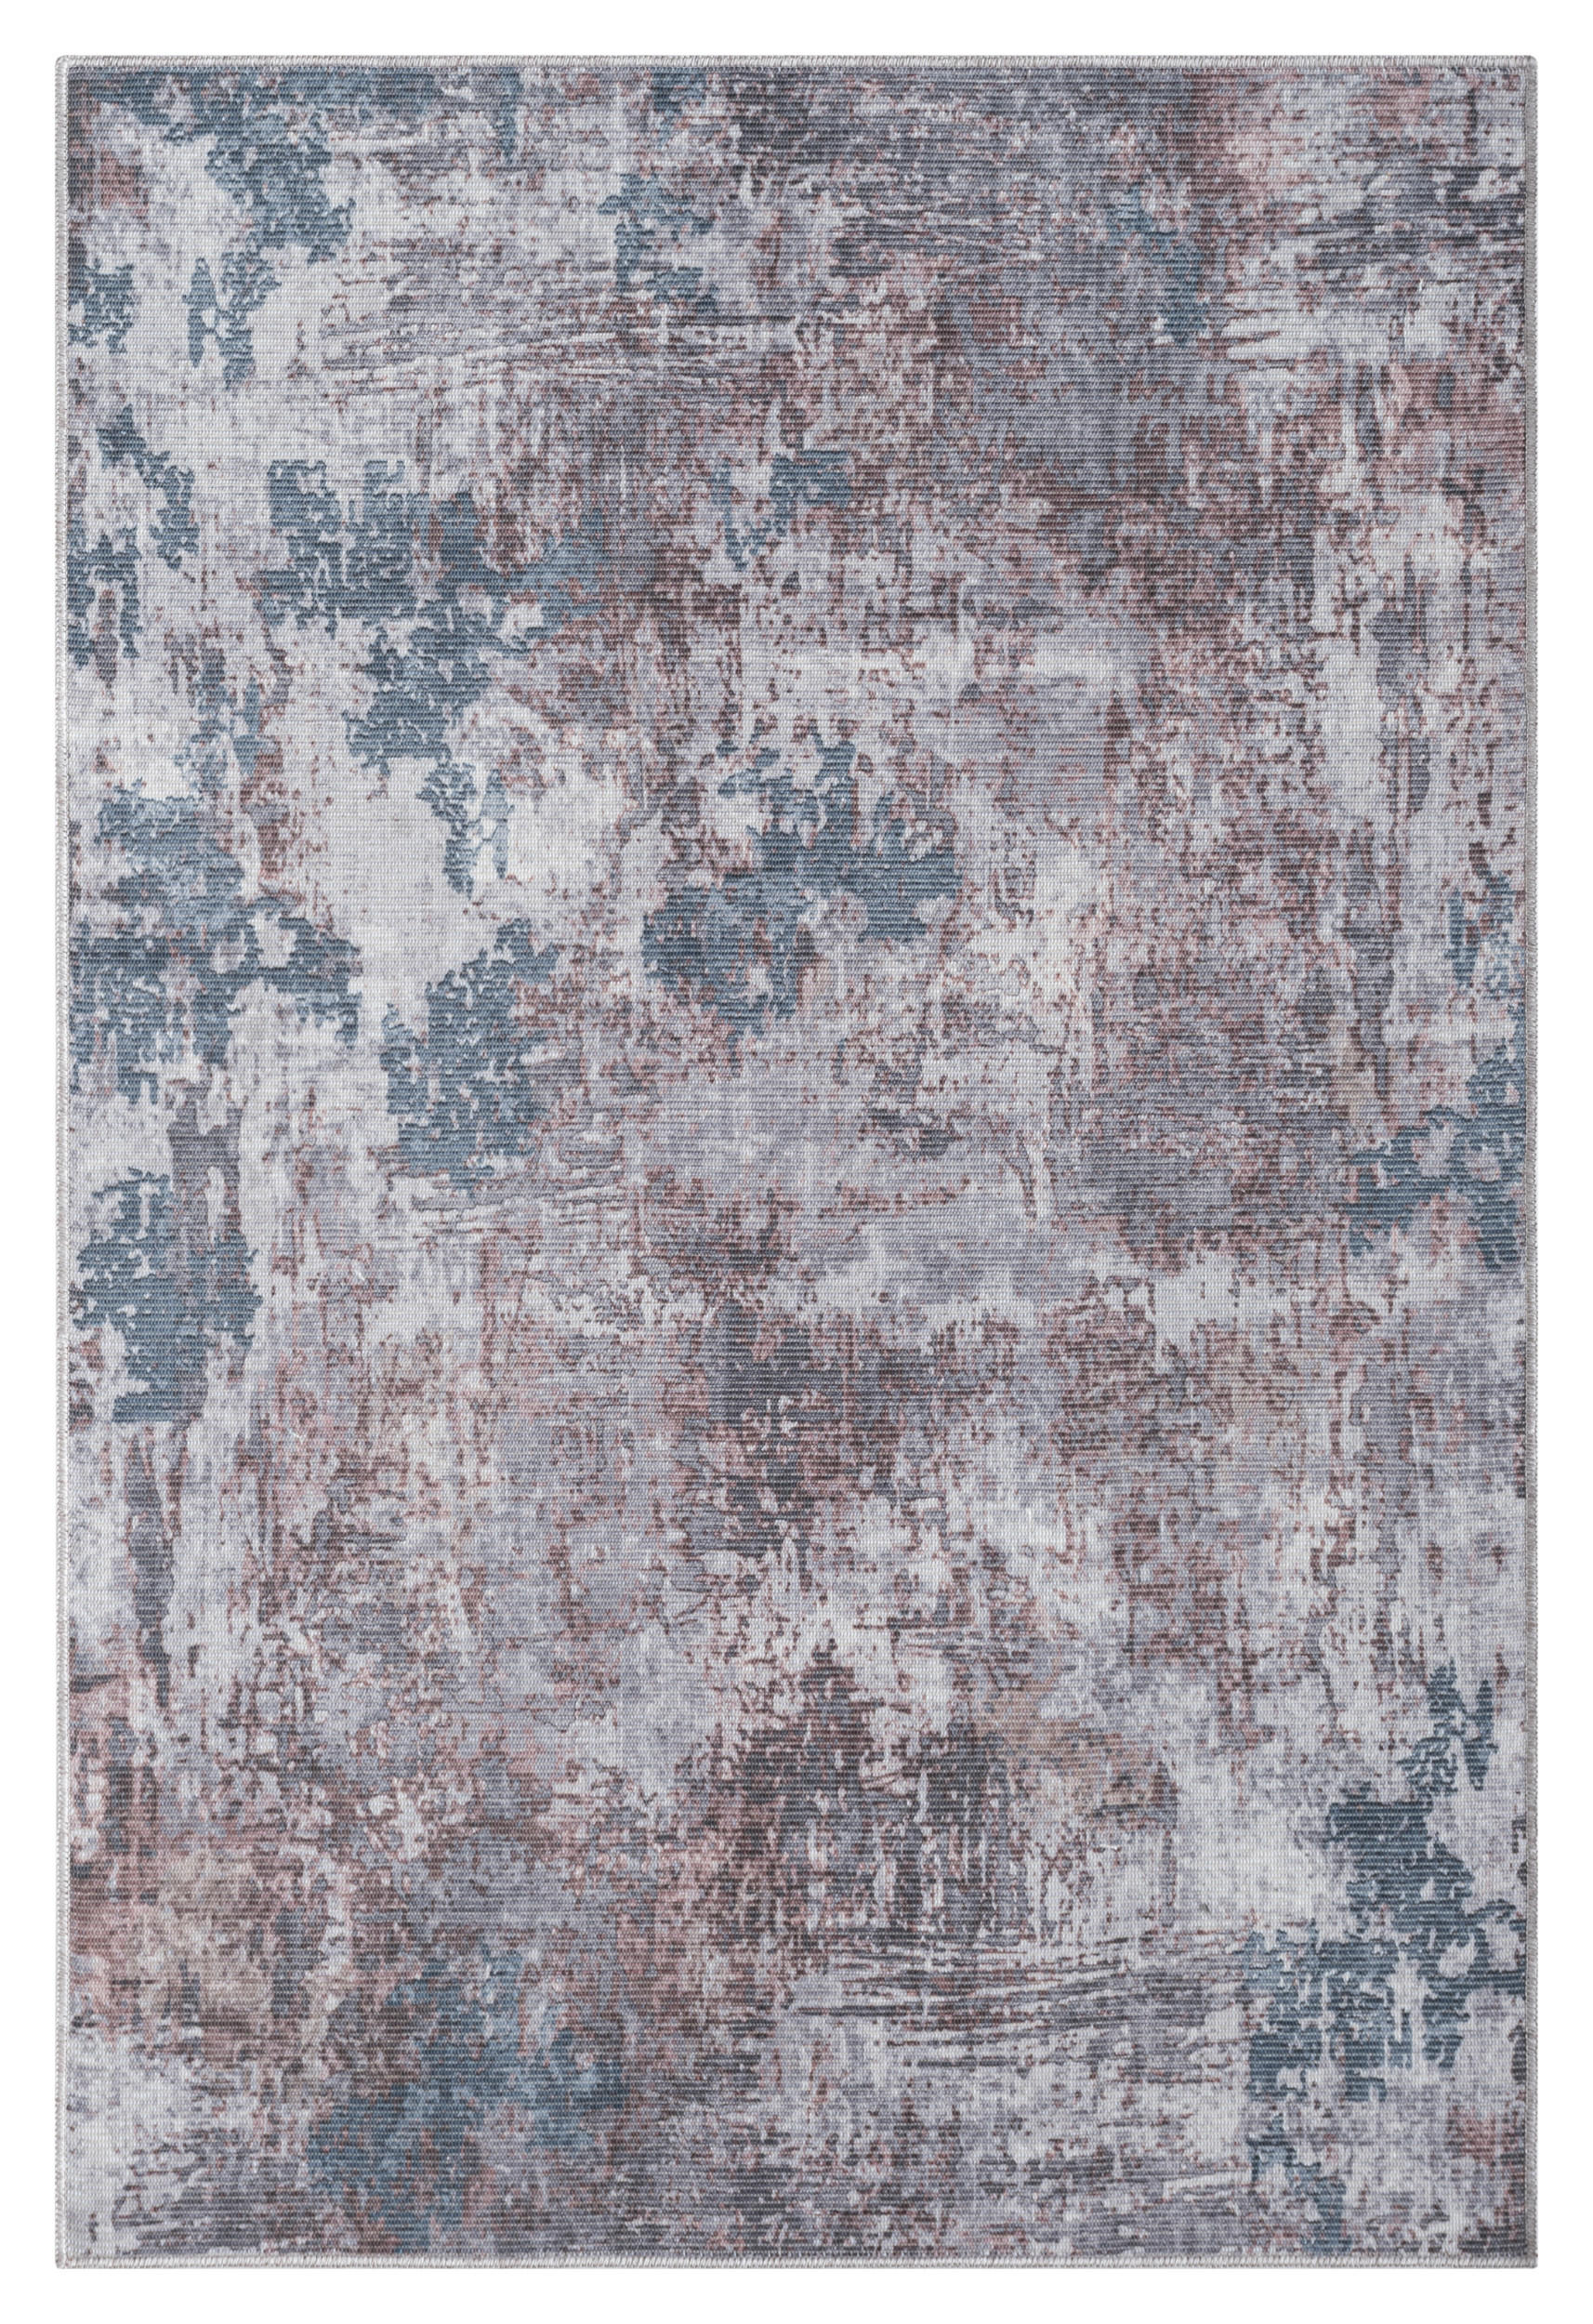 FLACHWEBETEPPICH  120/180 cm  Blau, Grau, Terra cotta   - Blau/Terra cotta, Basics, Textil (120/180cm)